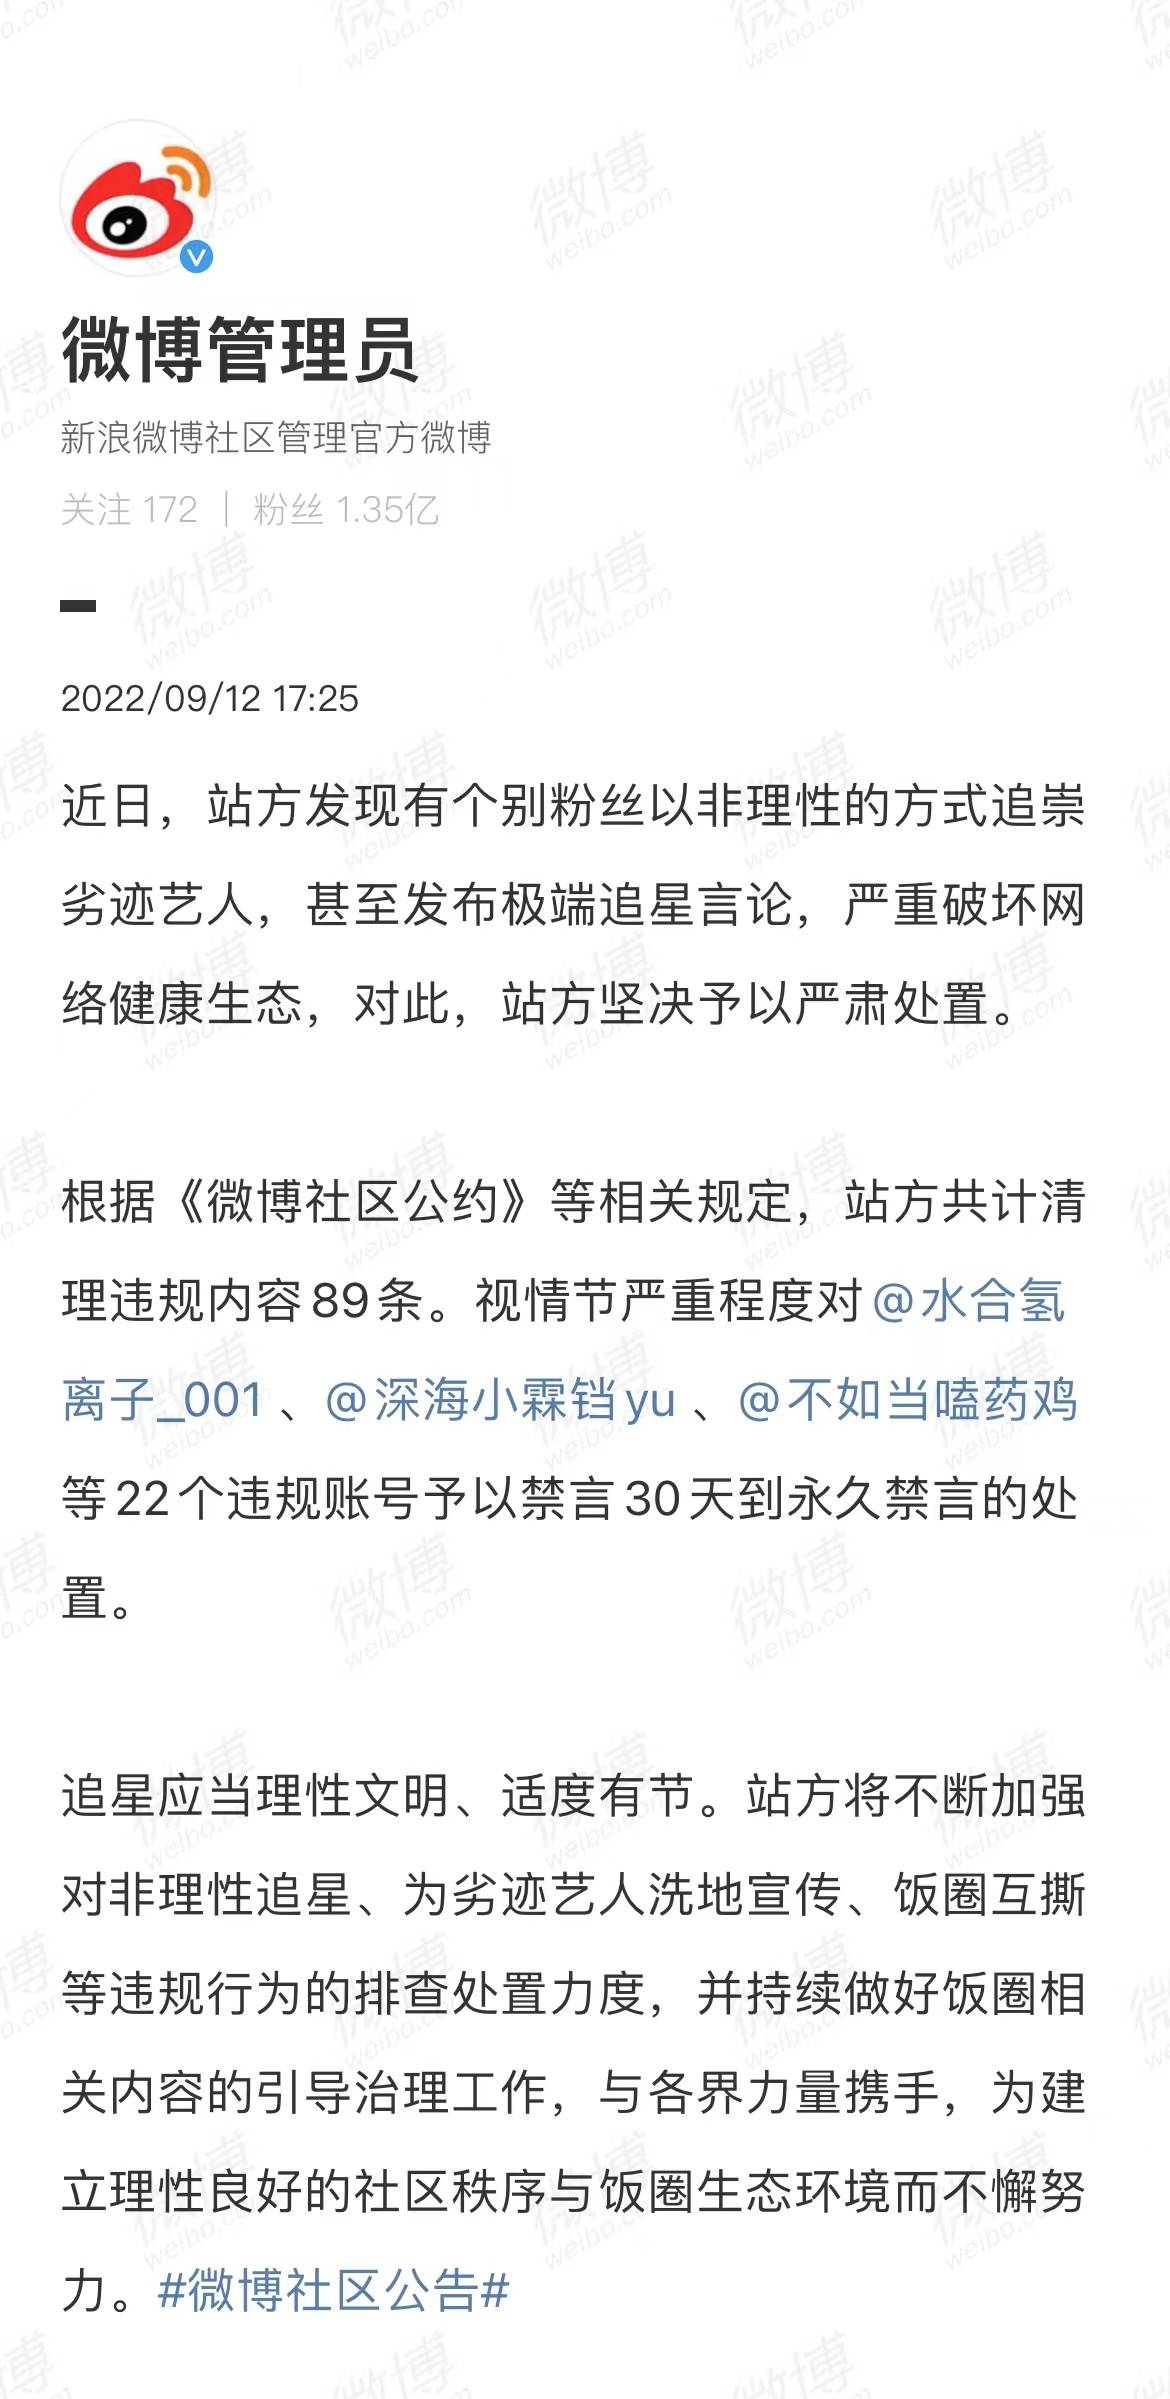 Morning Post Offizieller iOS16-Push / iPhone 14 Akkukapazität ausgesetzt / Weibo verfügt über extreme Star-Jagd-Bemerkungen - 111 2